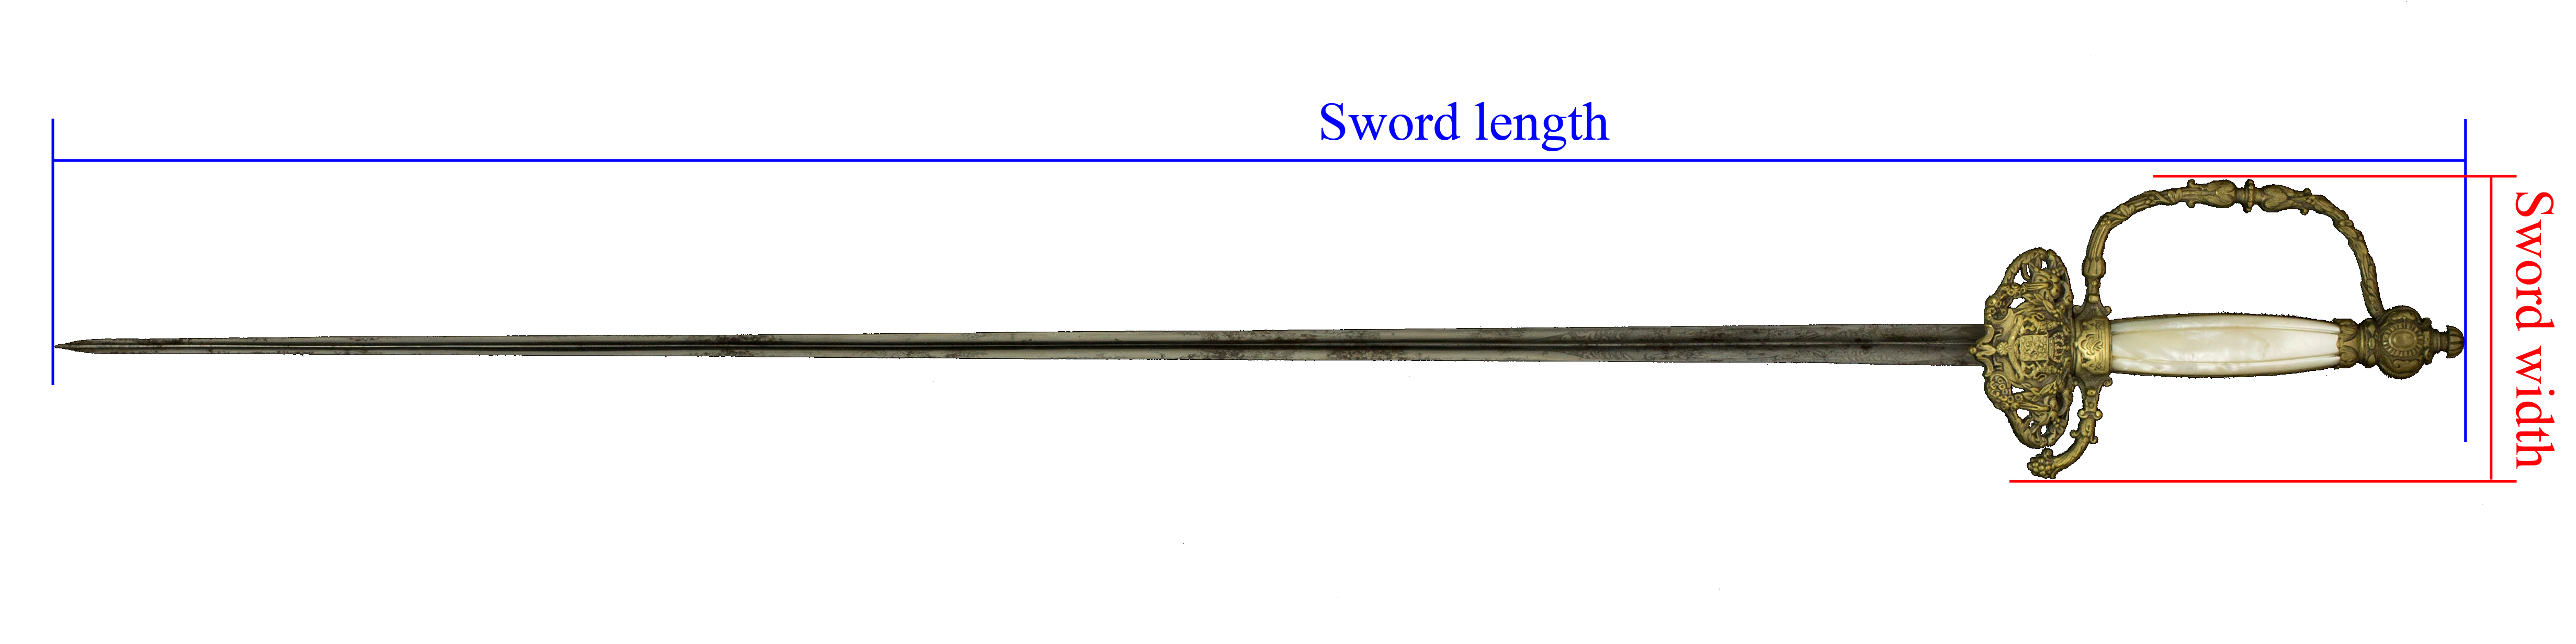 Sword Length and Width